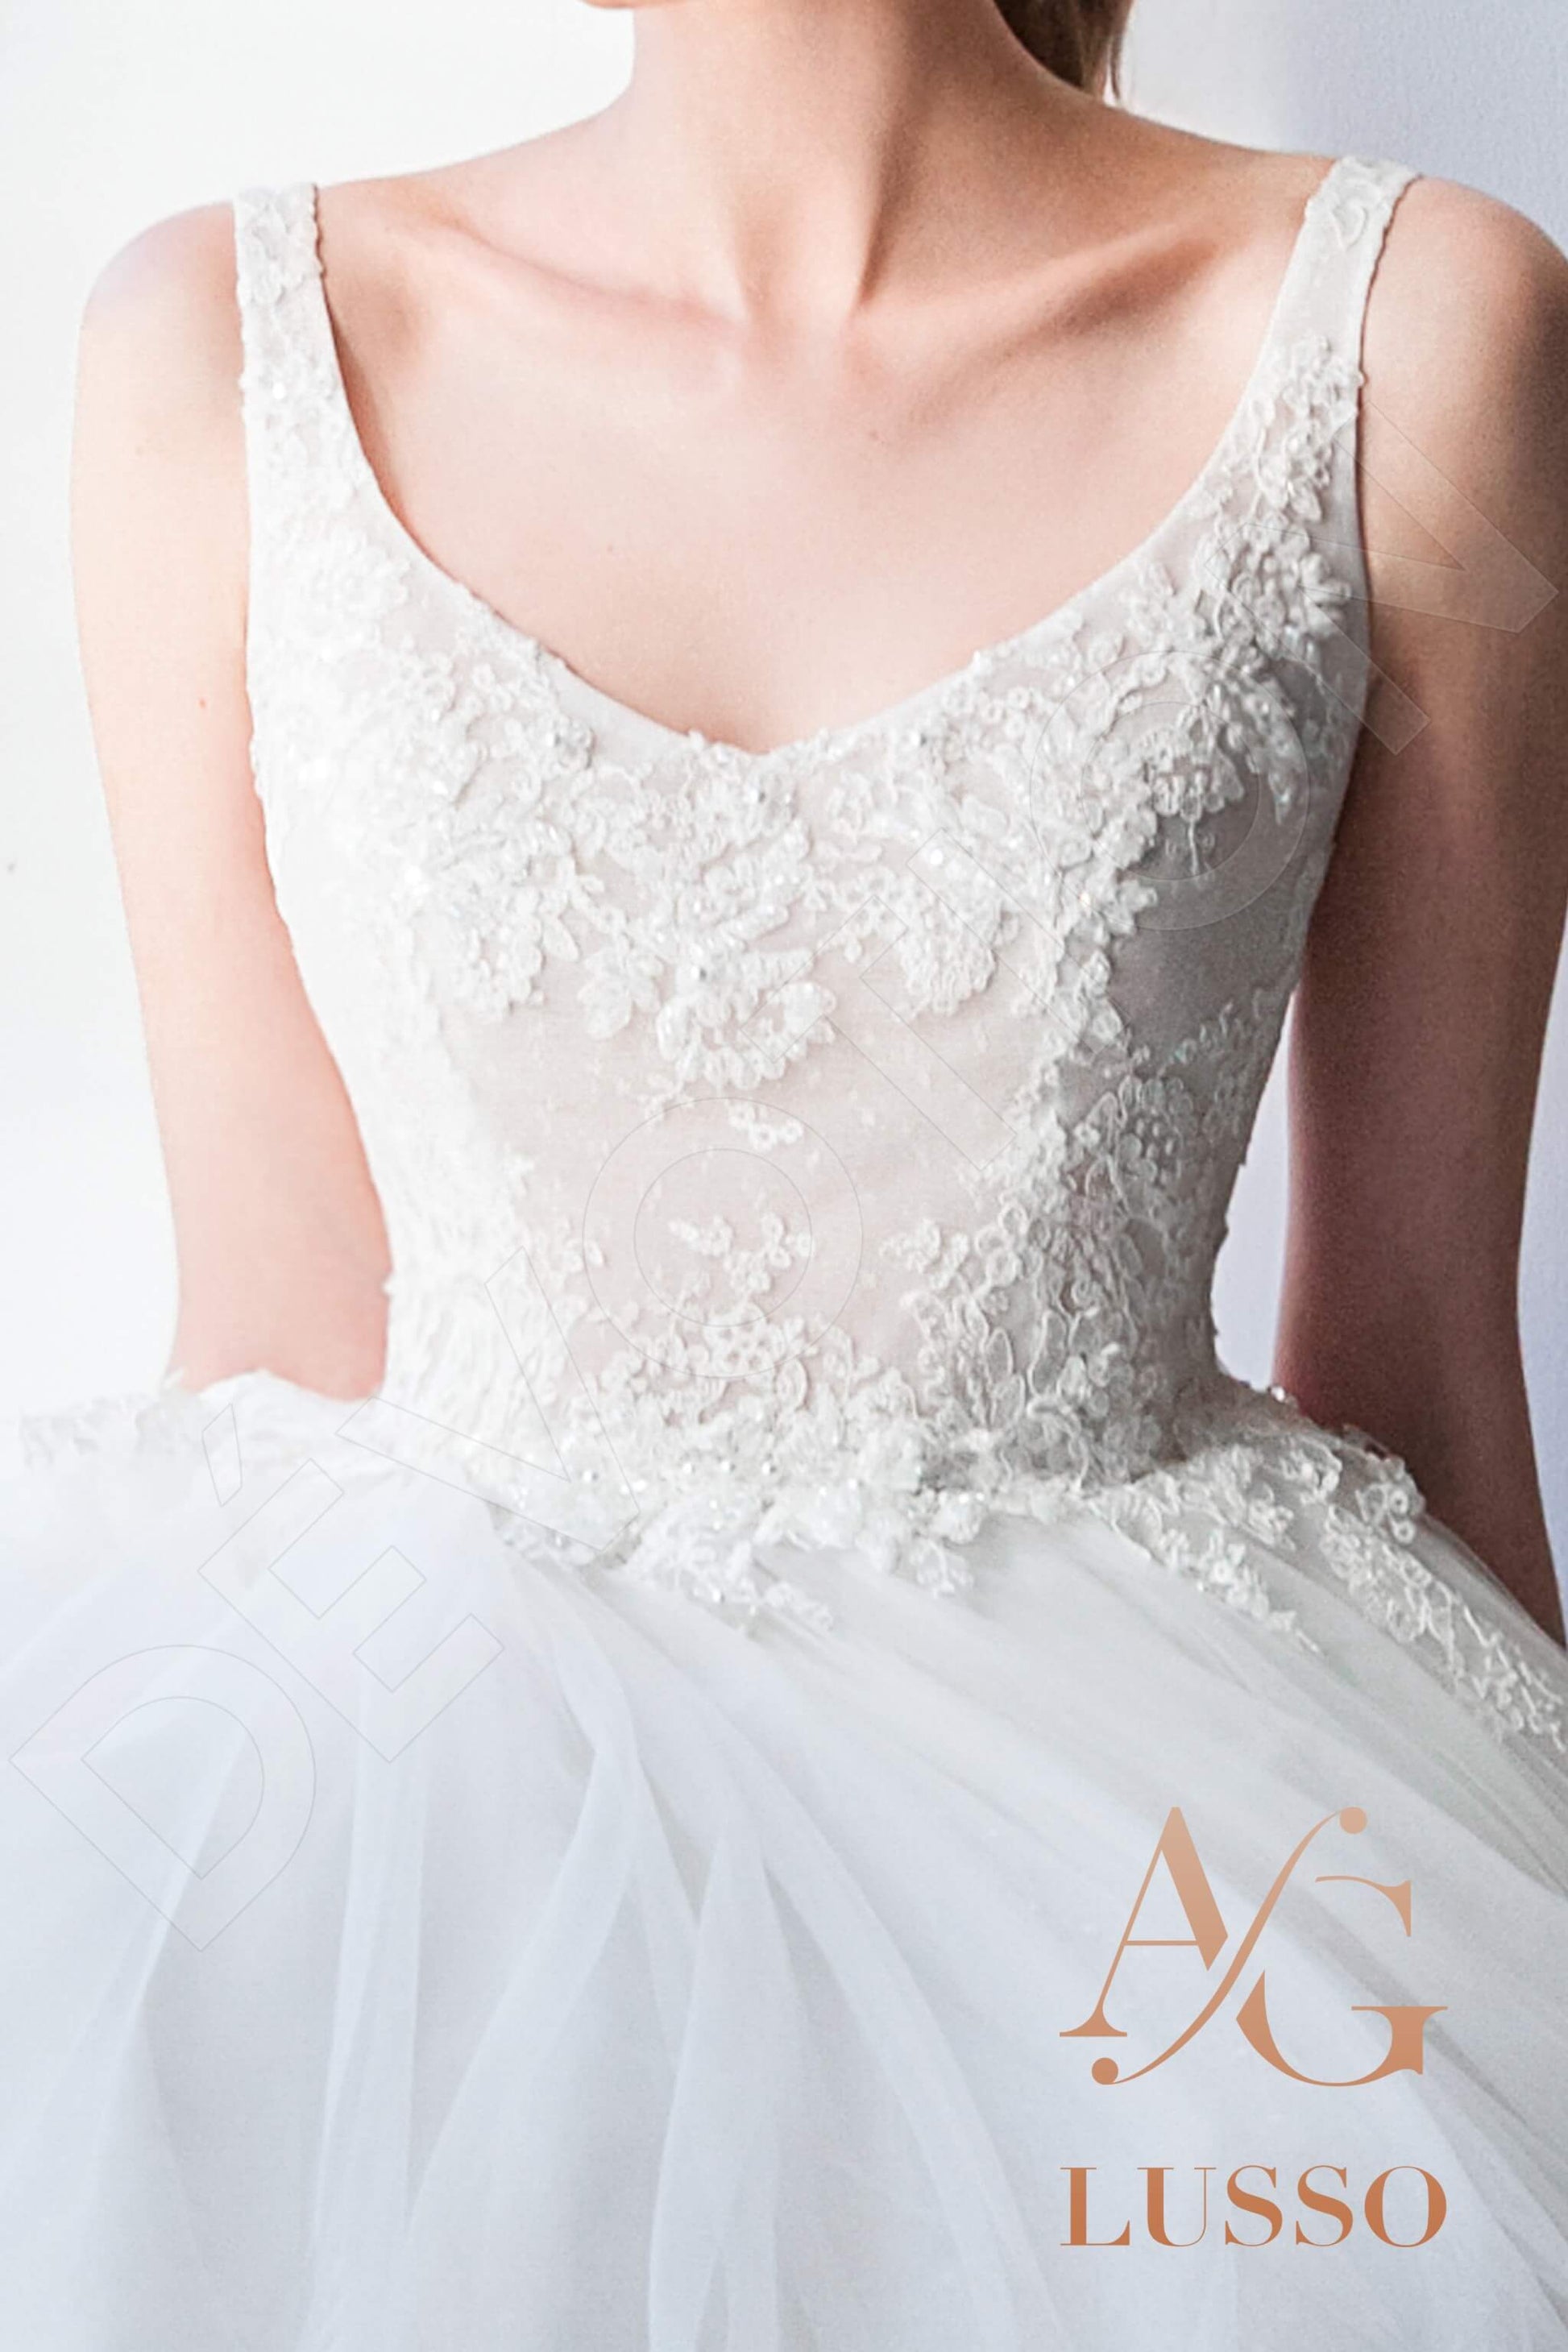 Soula Princess/Ball Gown V-neck Mediumivory Wedding dress